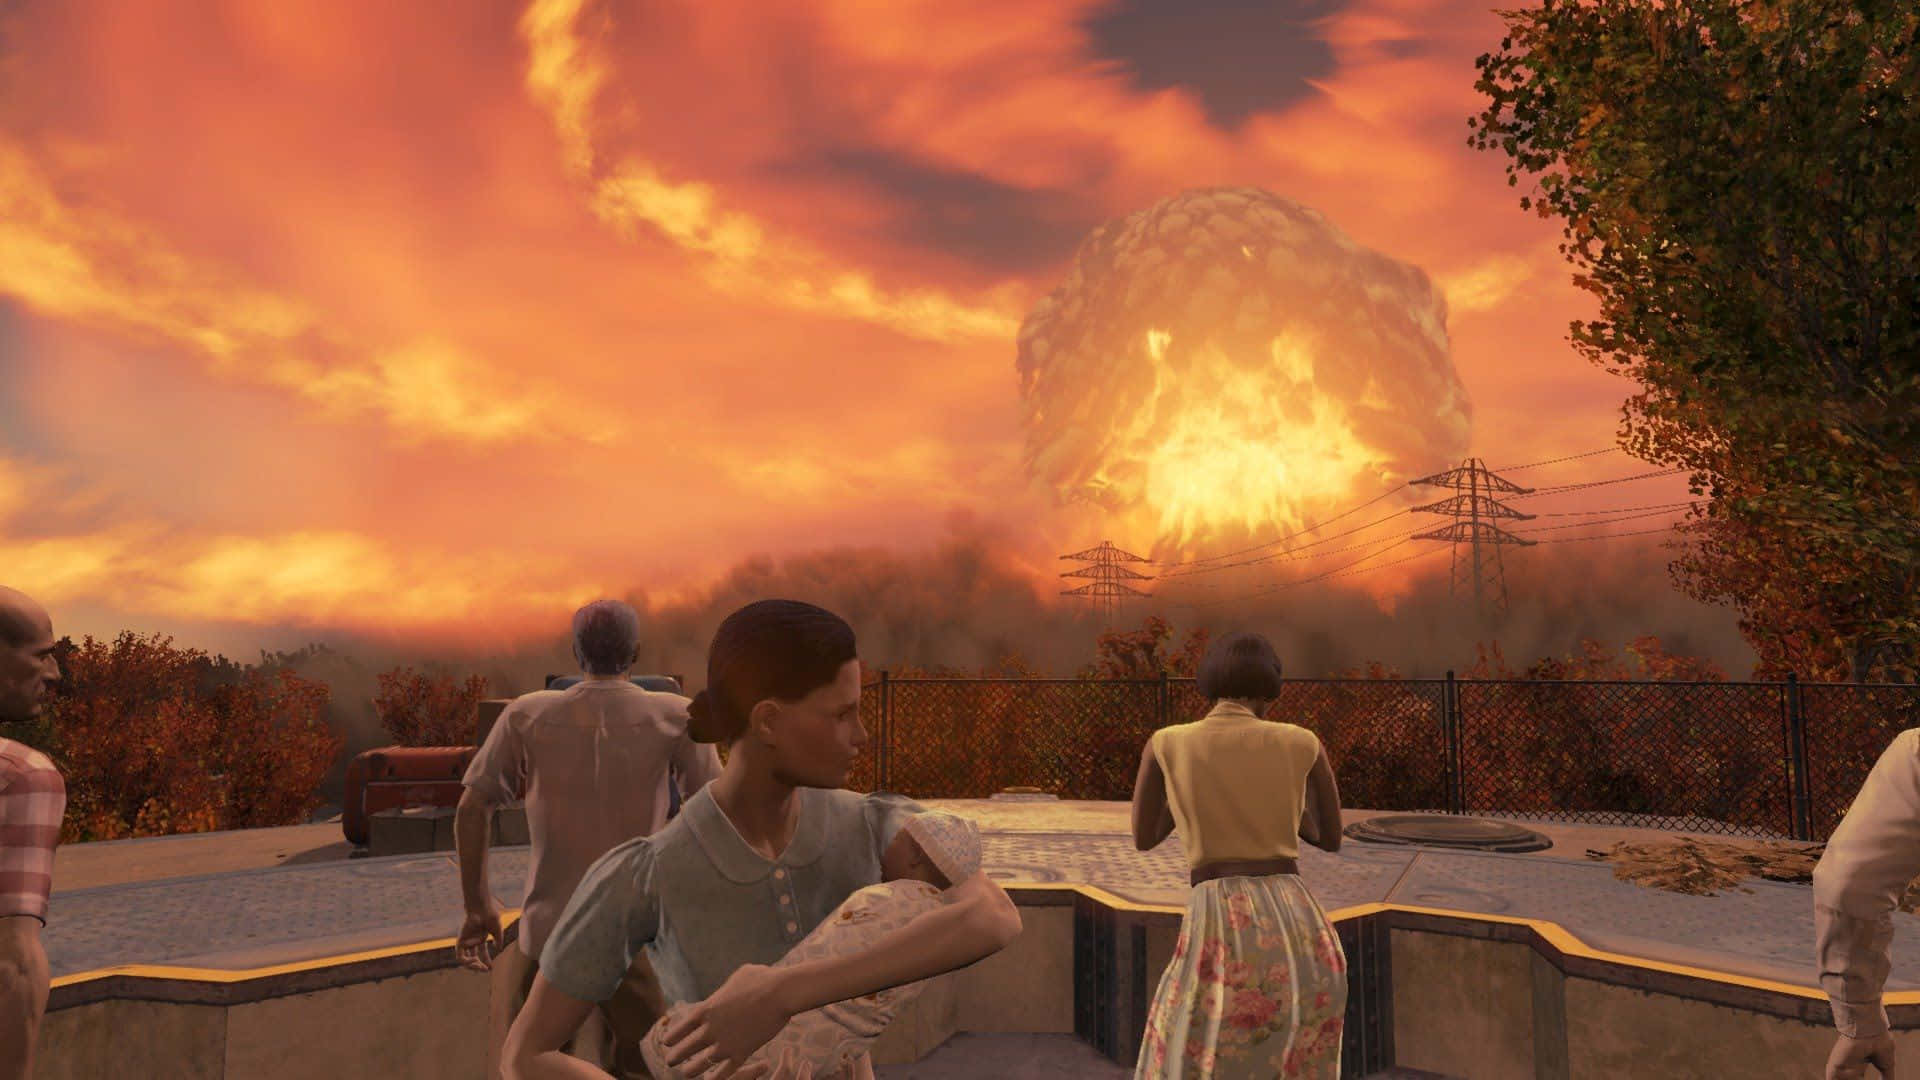 Fallout Nuke - Post-Apocalyptic Explosion Scene Wallpaper